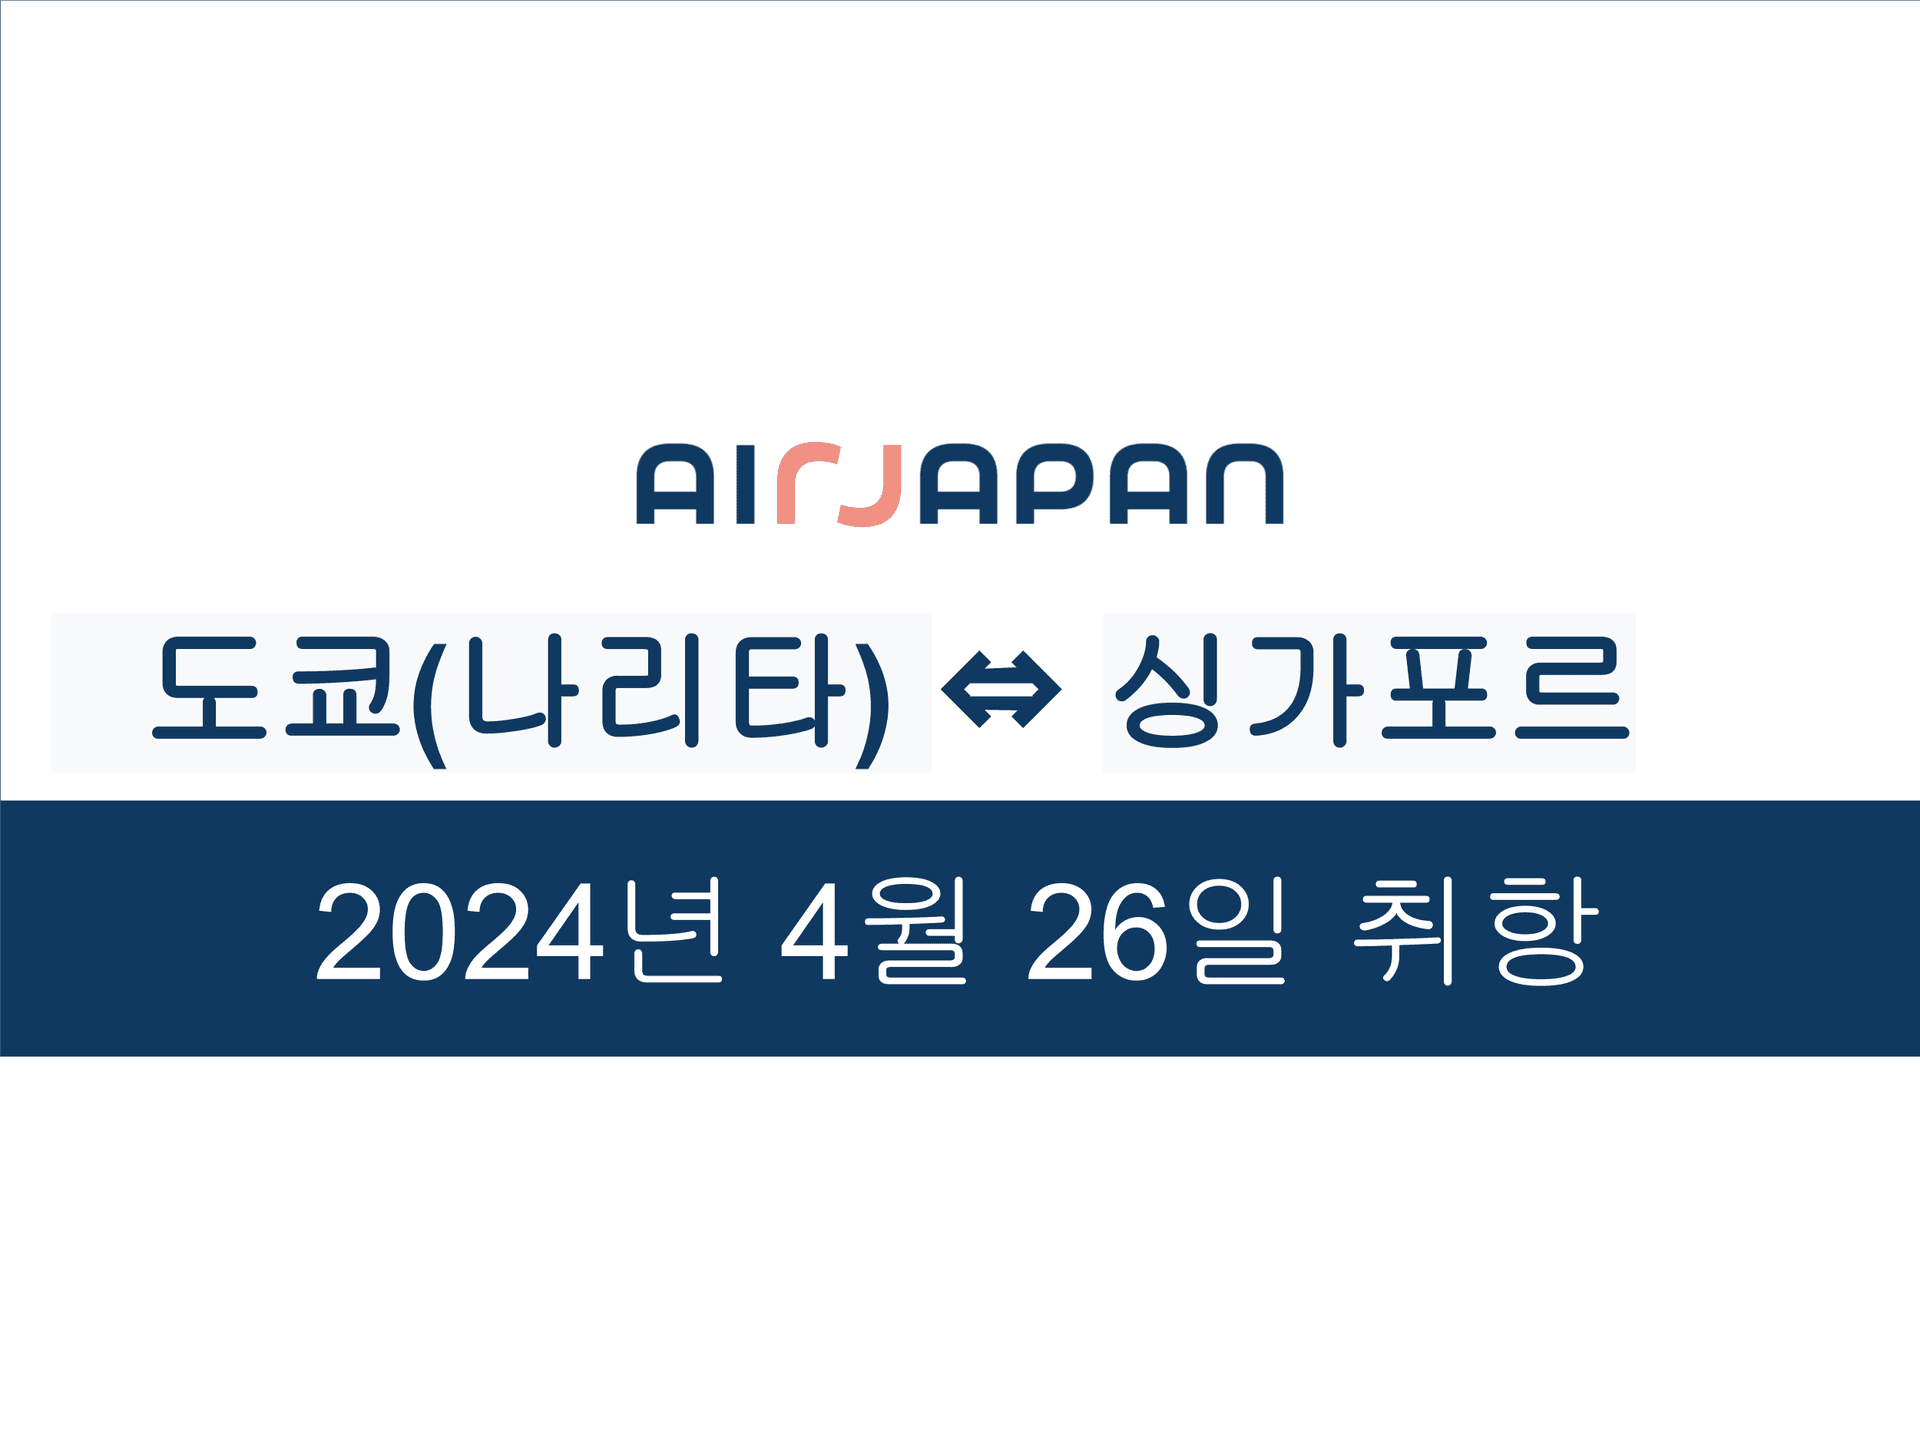 AirJapan은 2024년 4월 26일(금)부터 나리타⇔싱가포르선에 취항합니다!